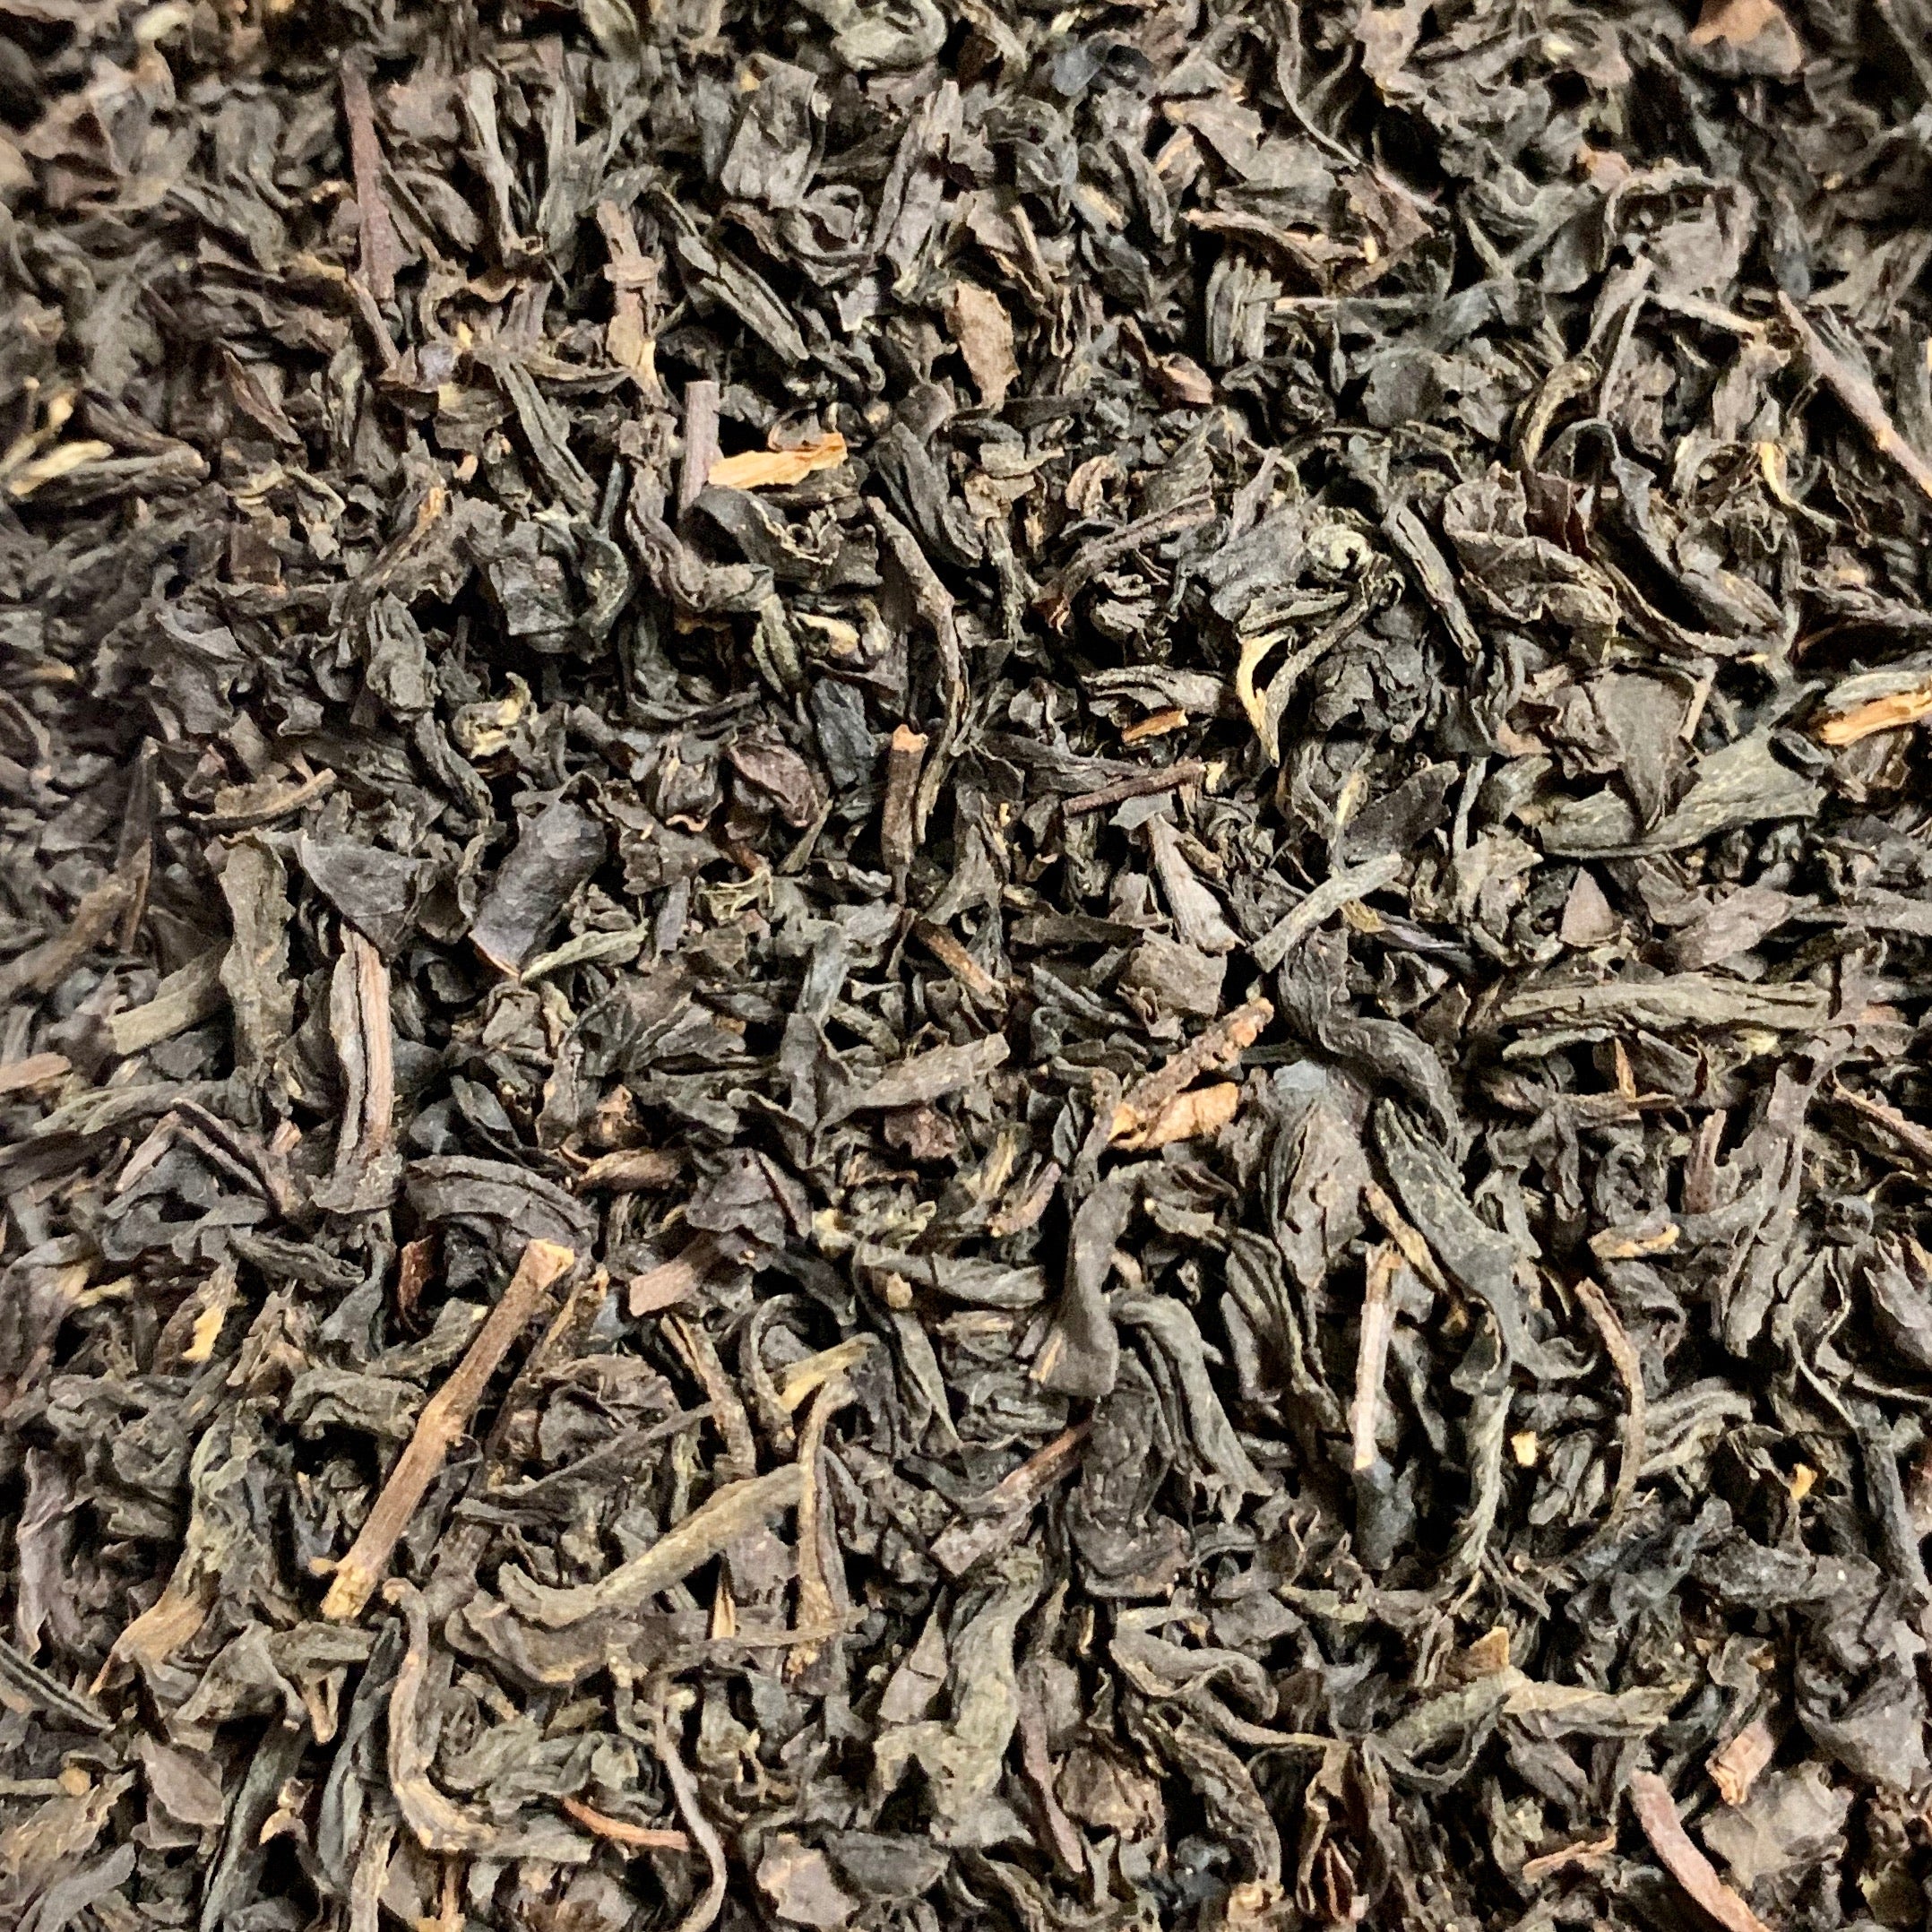 Lapsang Souchong Black Tea (Camellia sinensis)